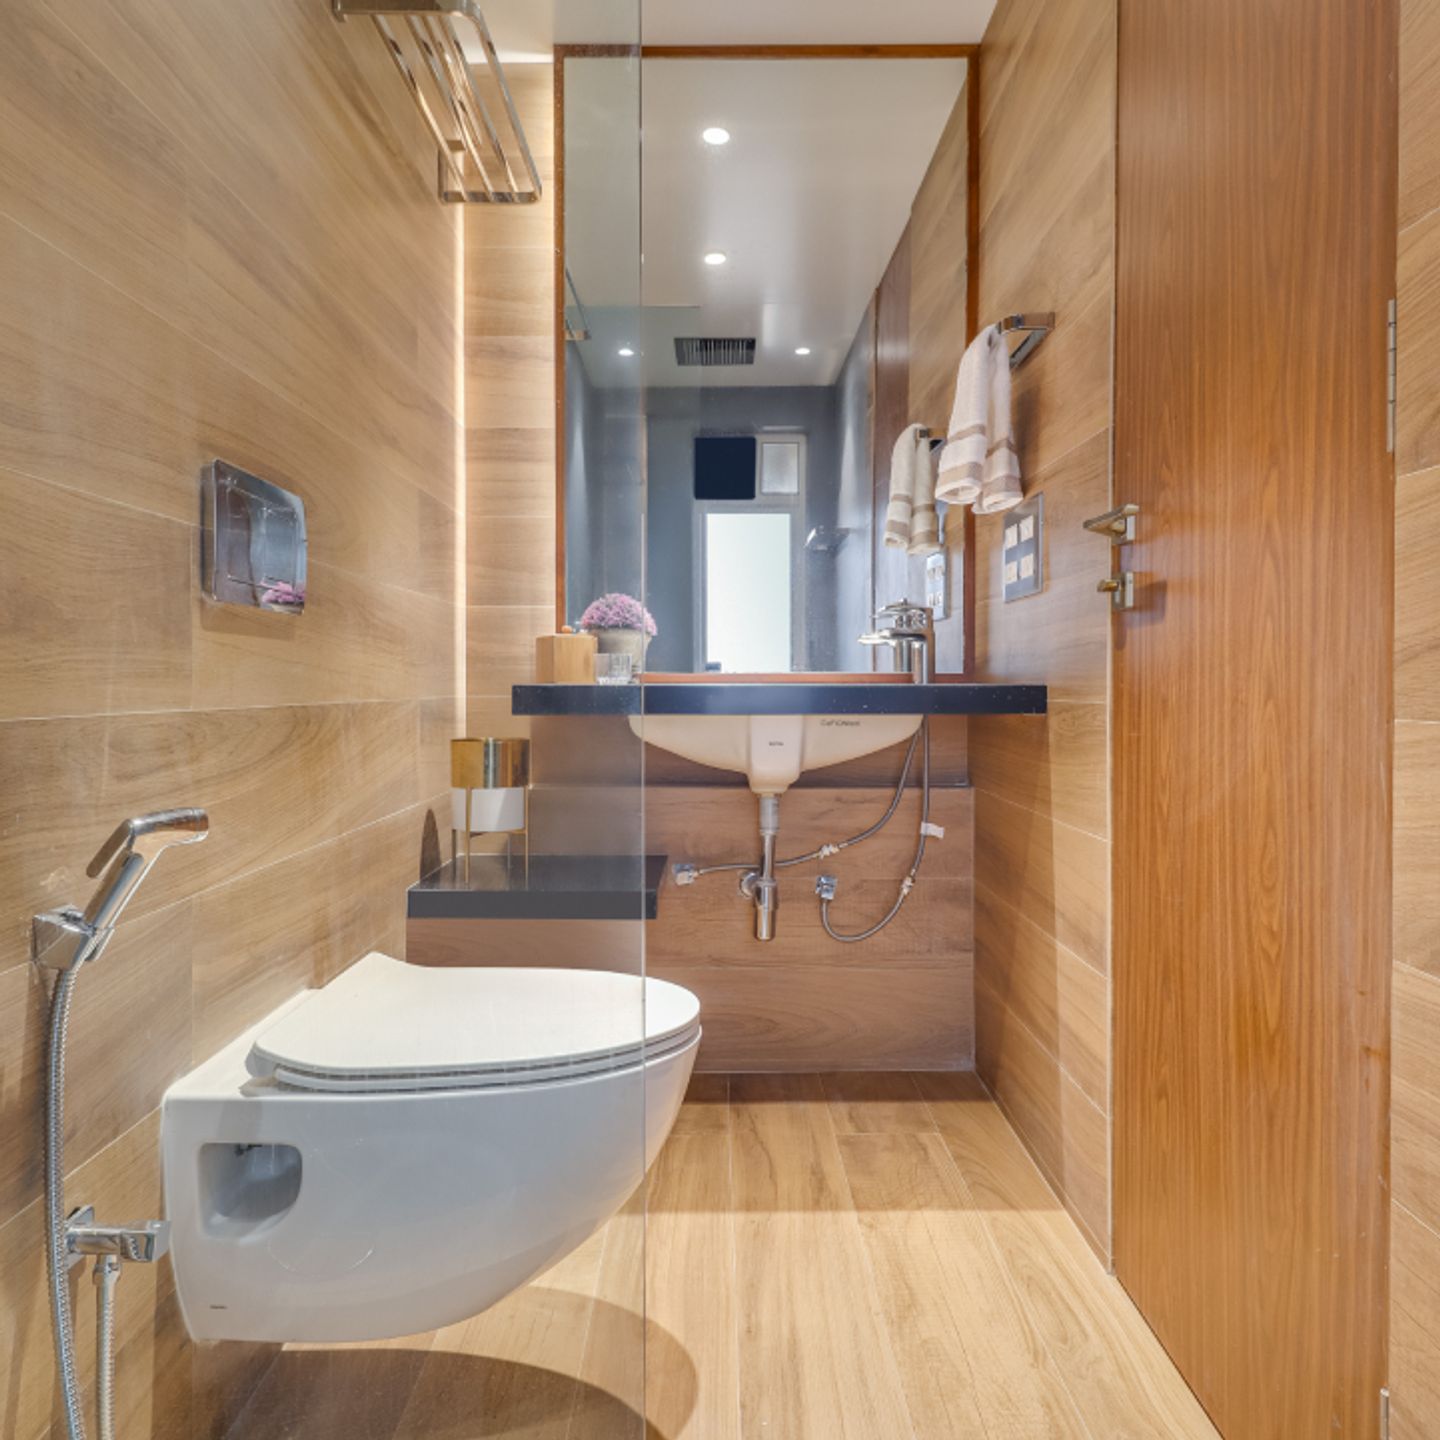 7X6 Ft Wooden Small Bathroom Design - Livspace